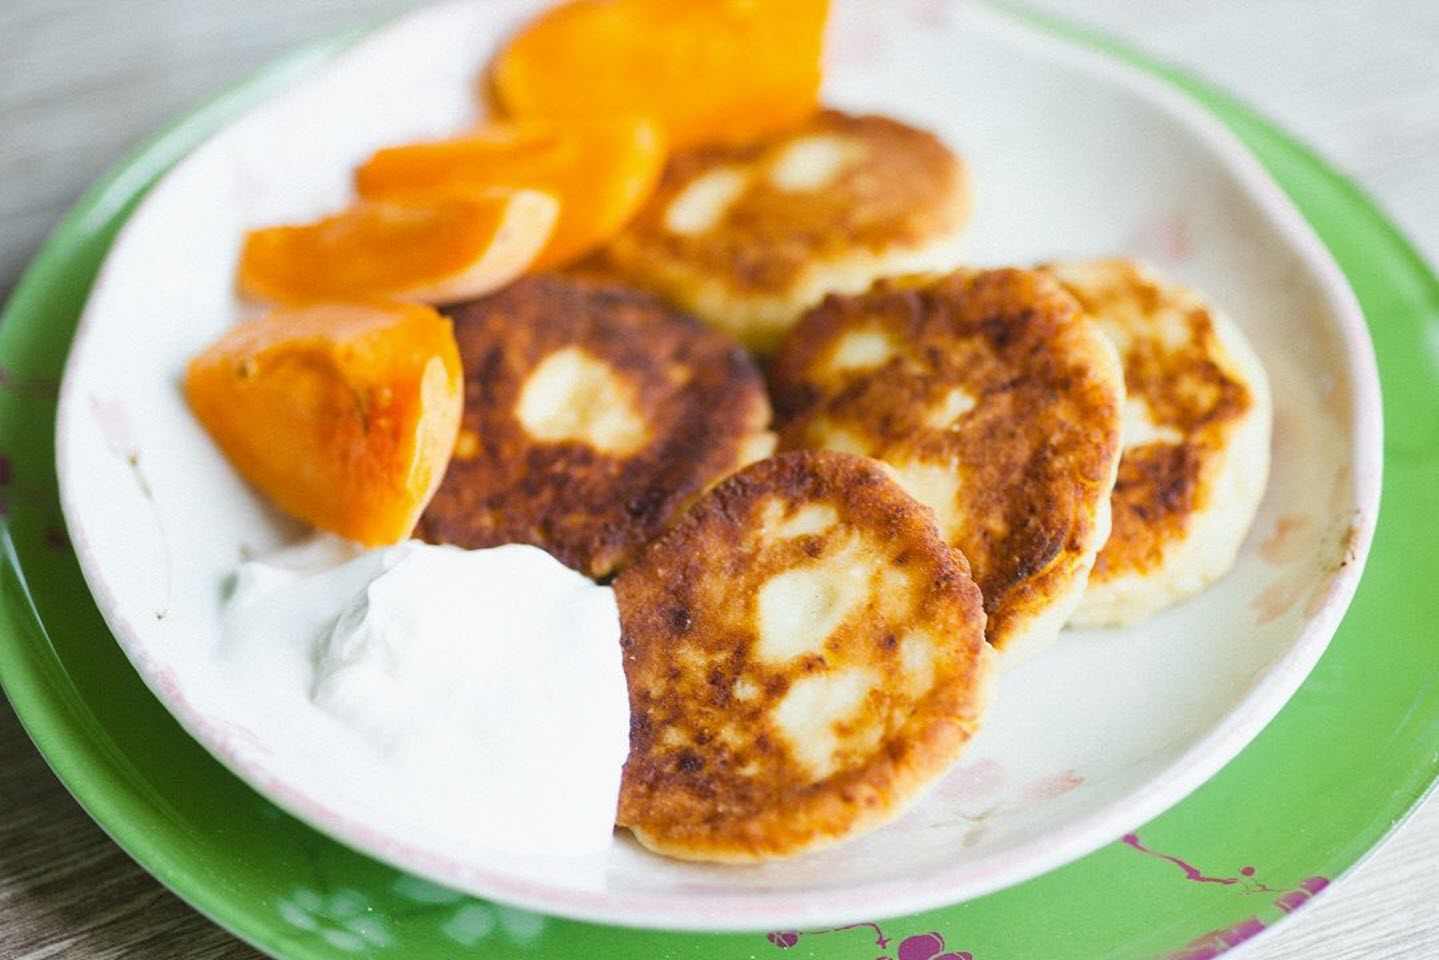 Russian Cheese Pancakes (Syrniki)